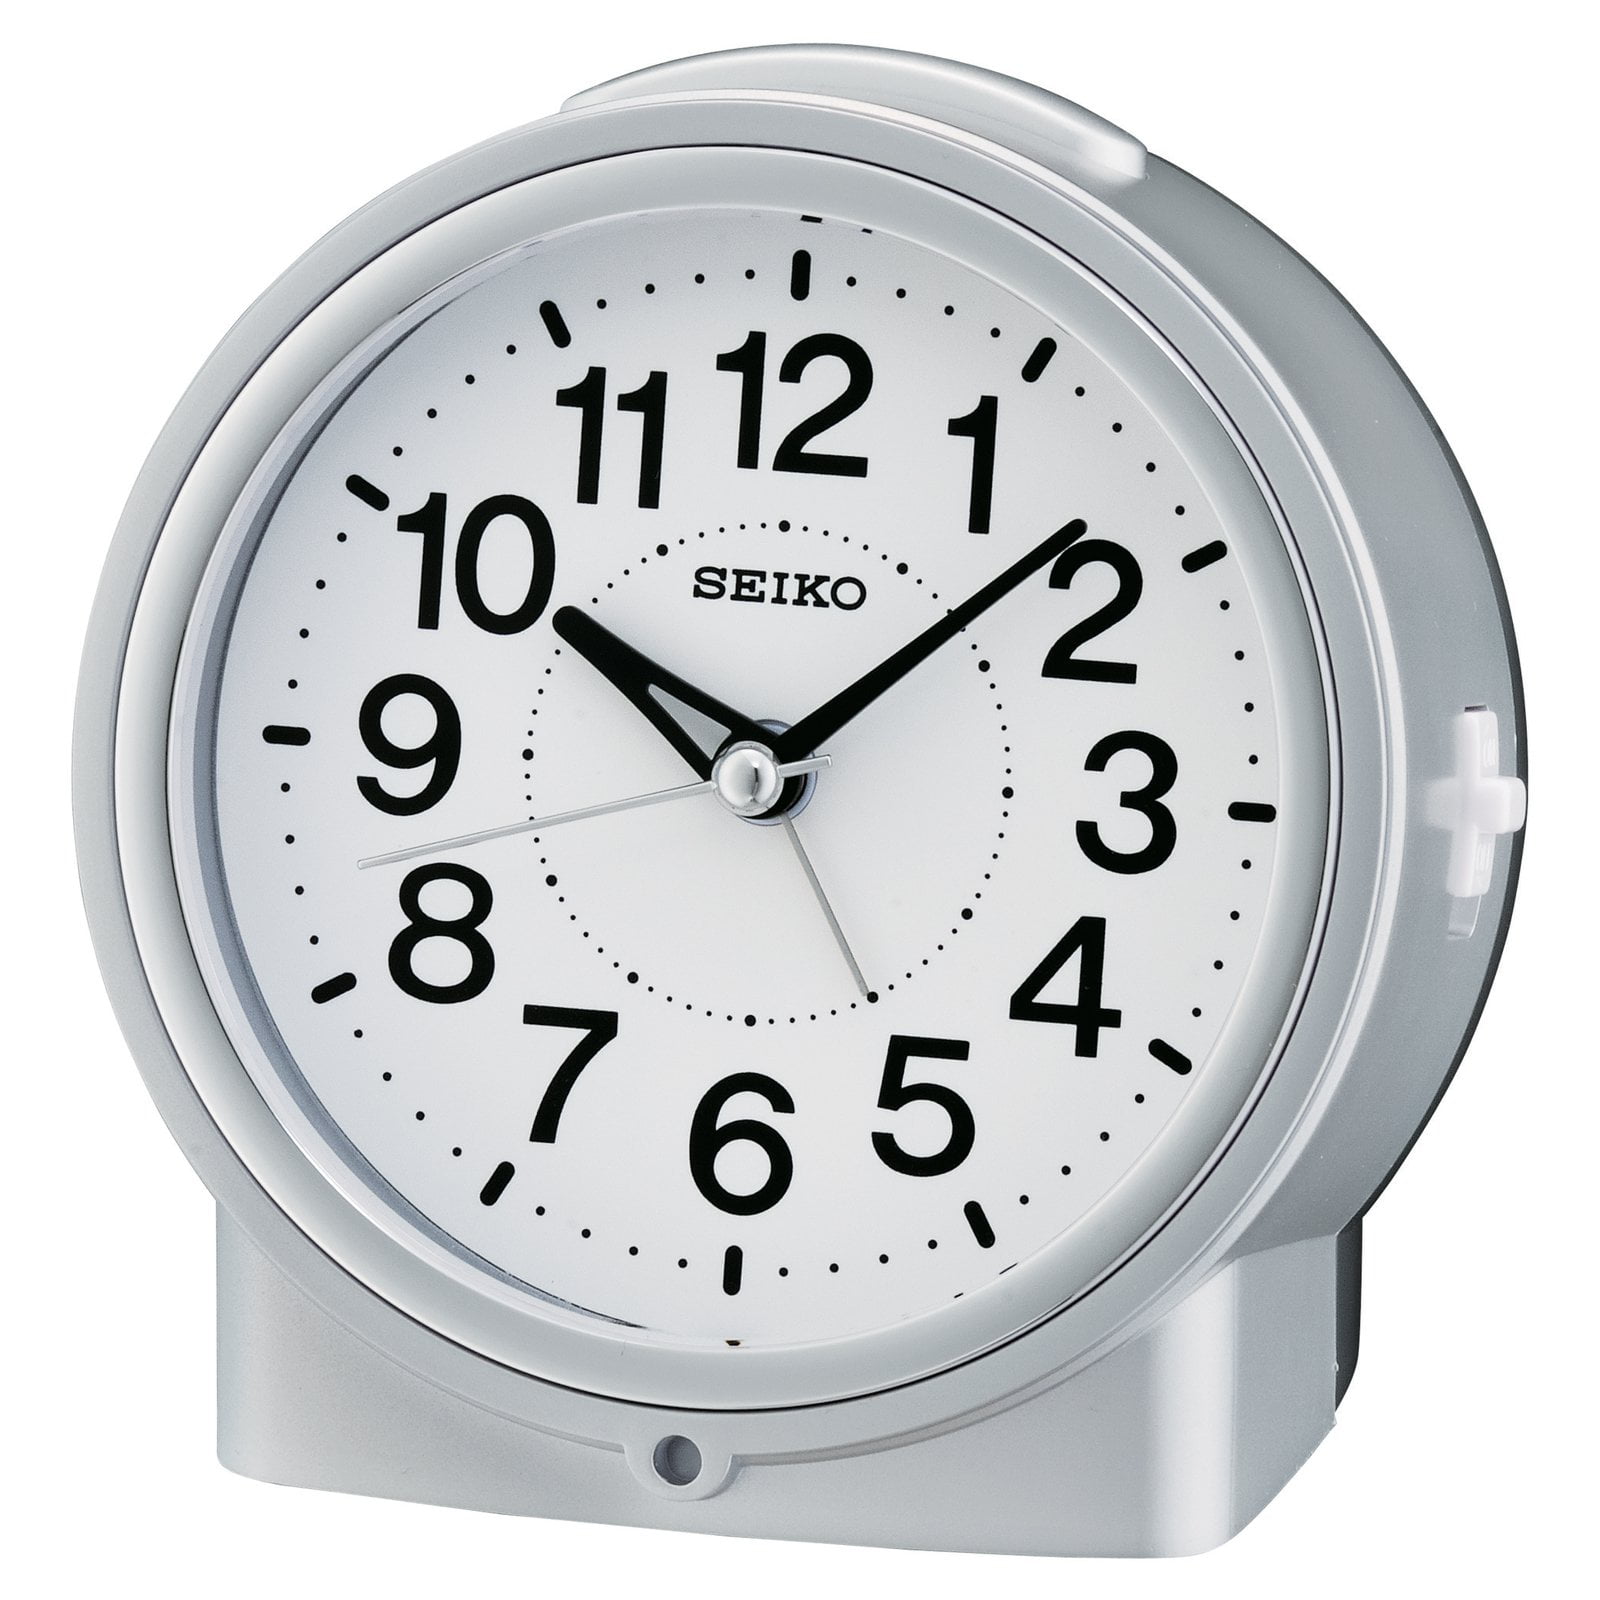 Seiko Bedside Alarm Clock - Walmart.com